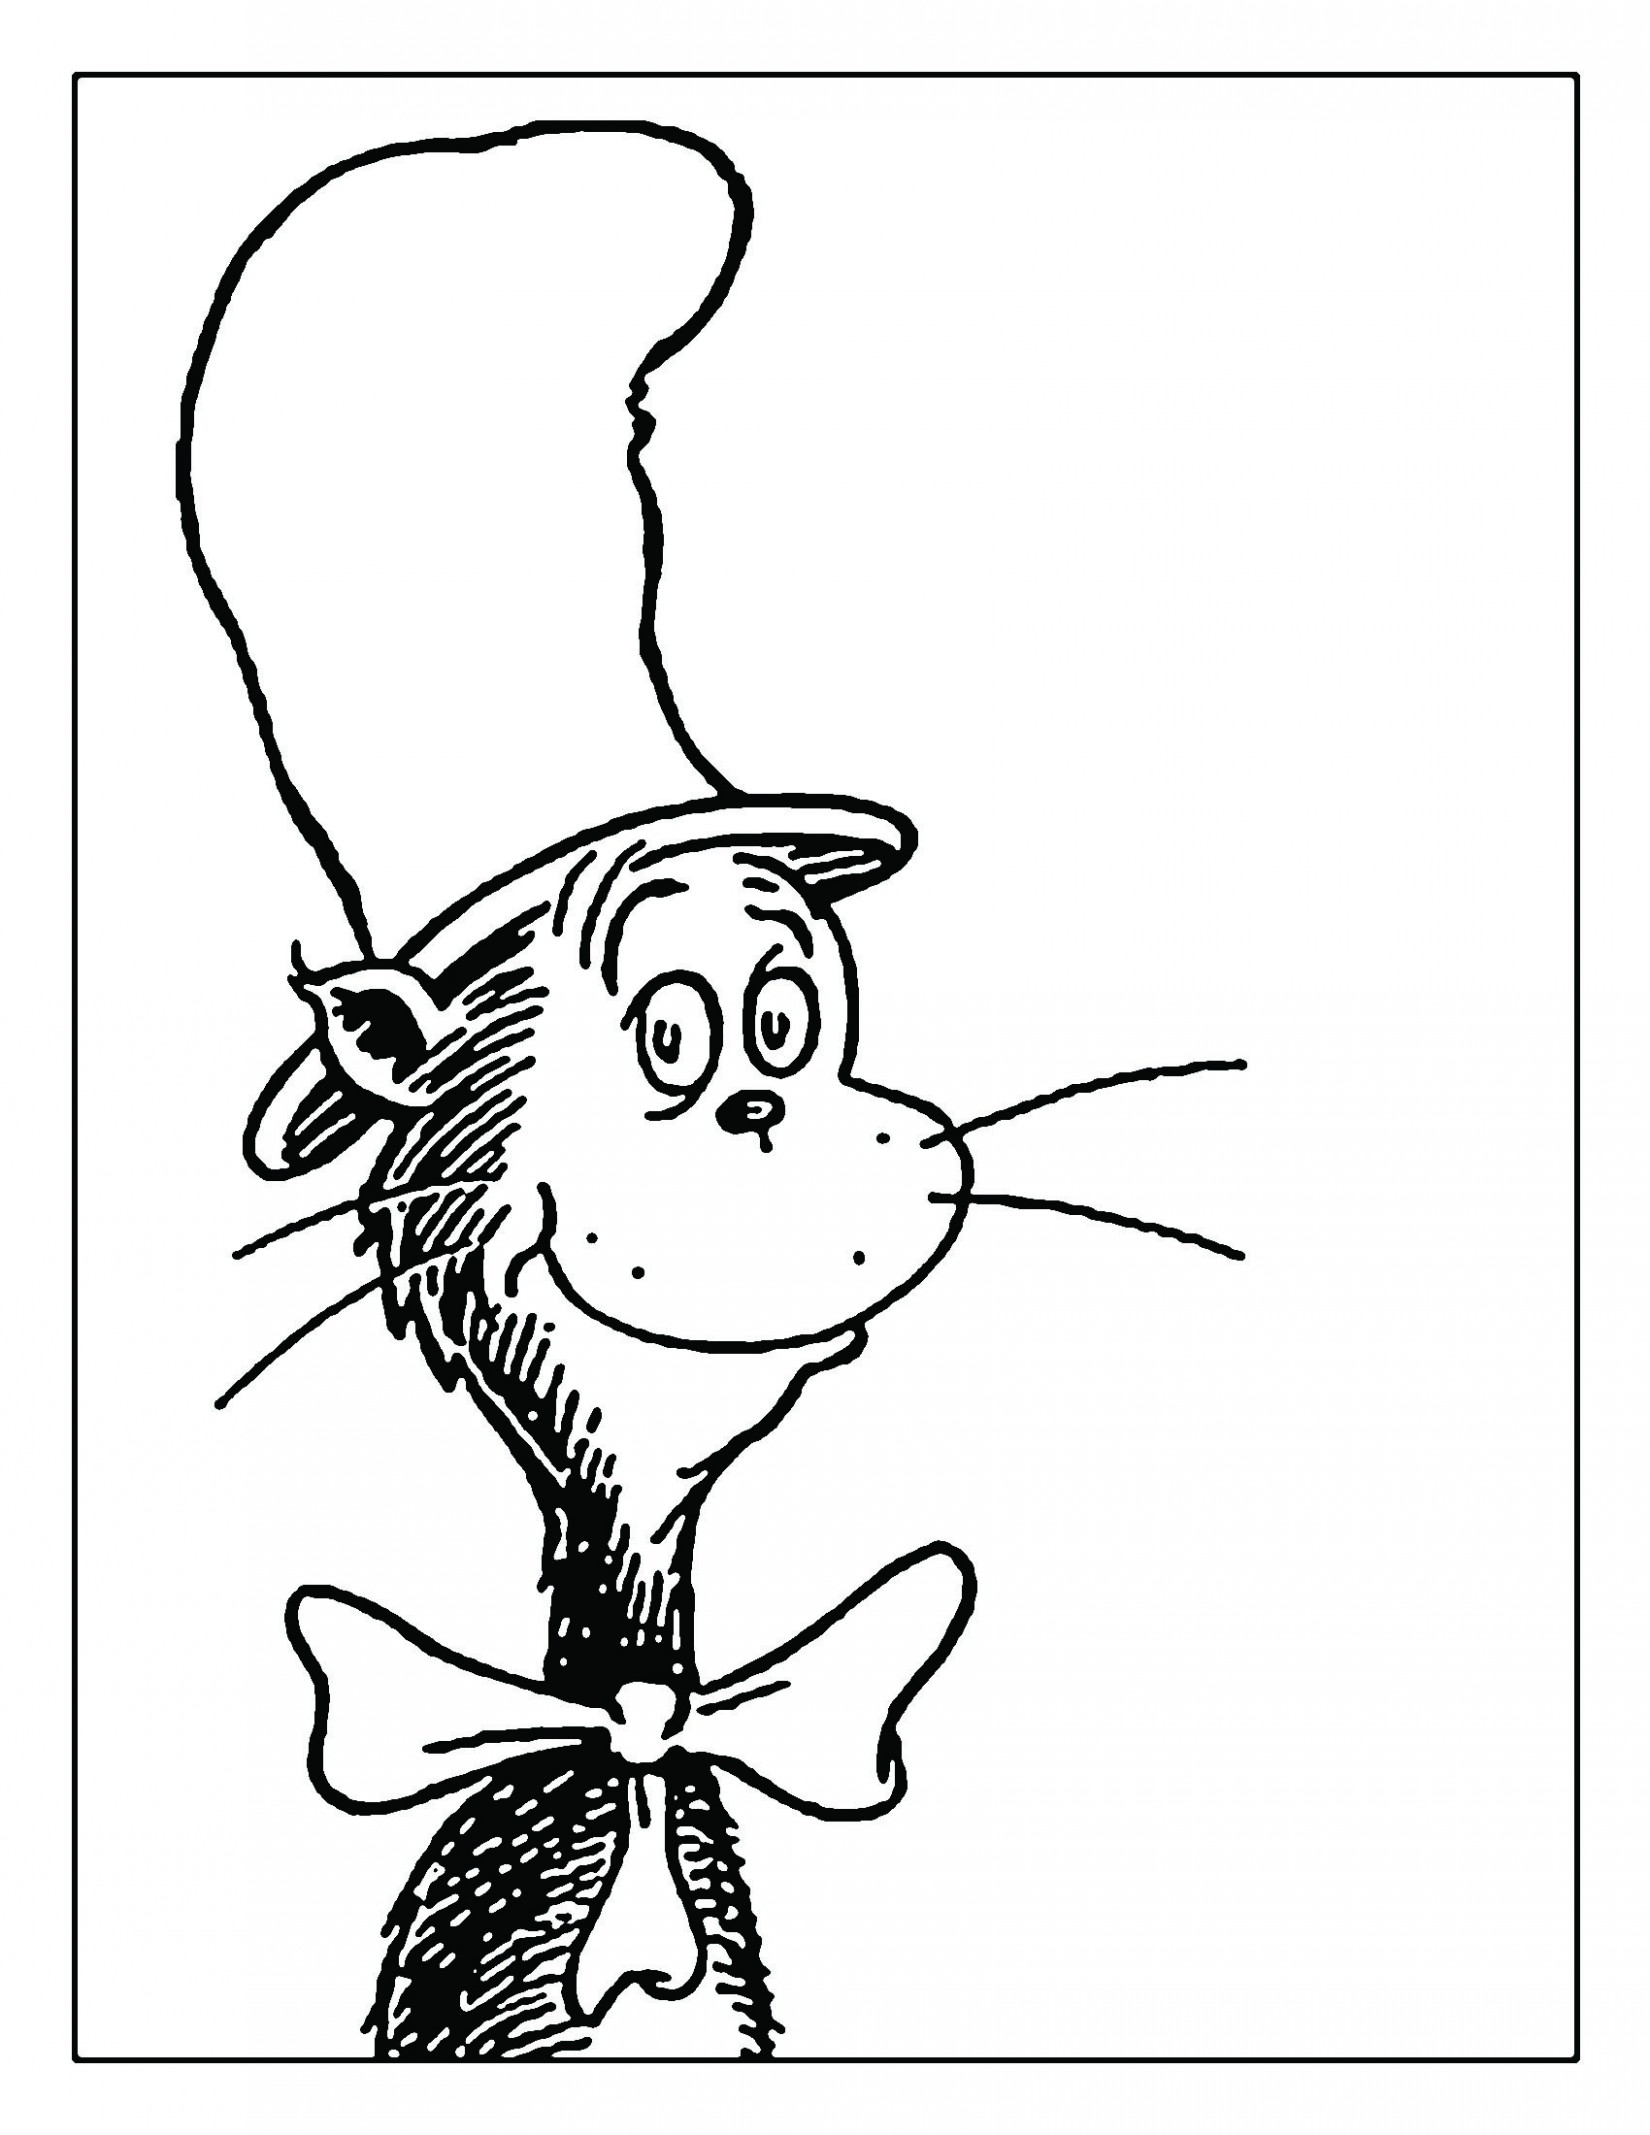 Dr. Seuss Cat in the Hat.